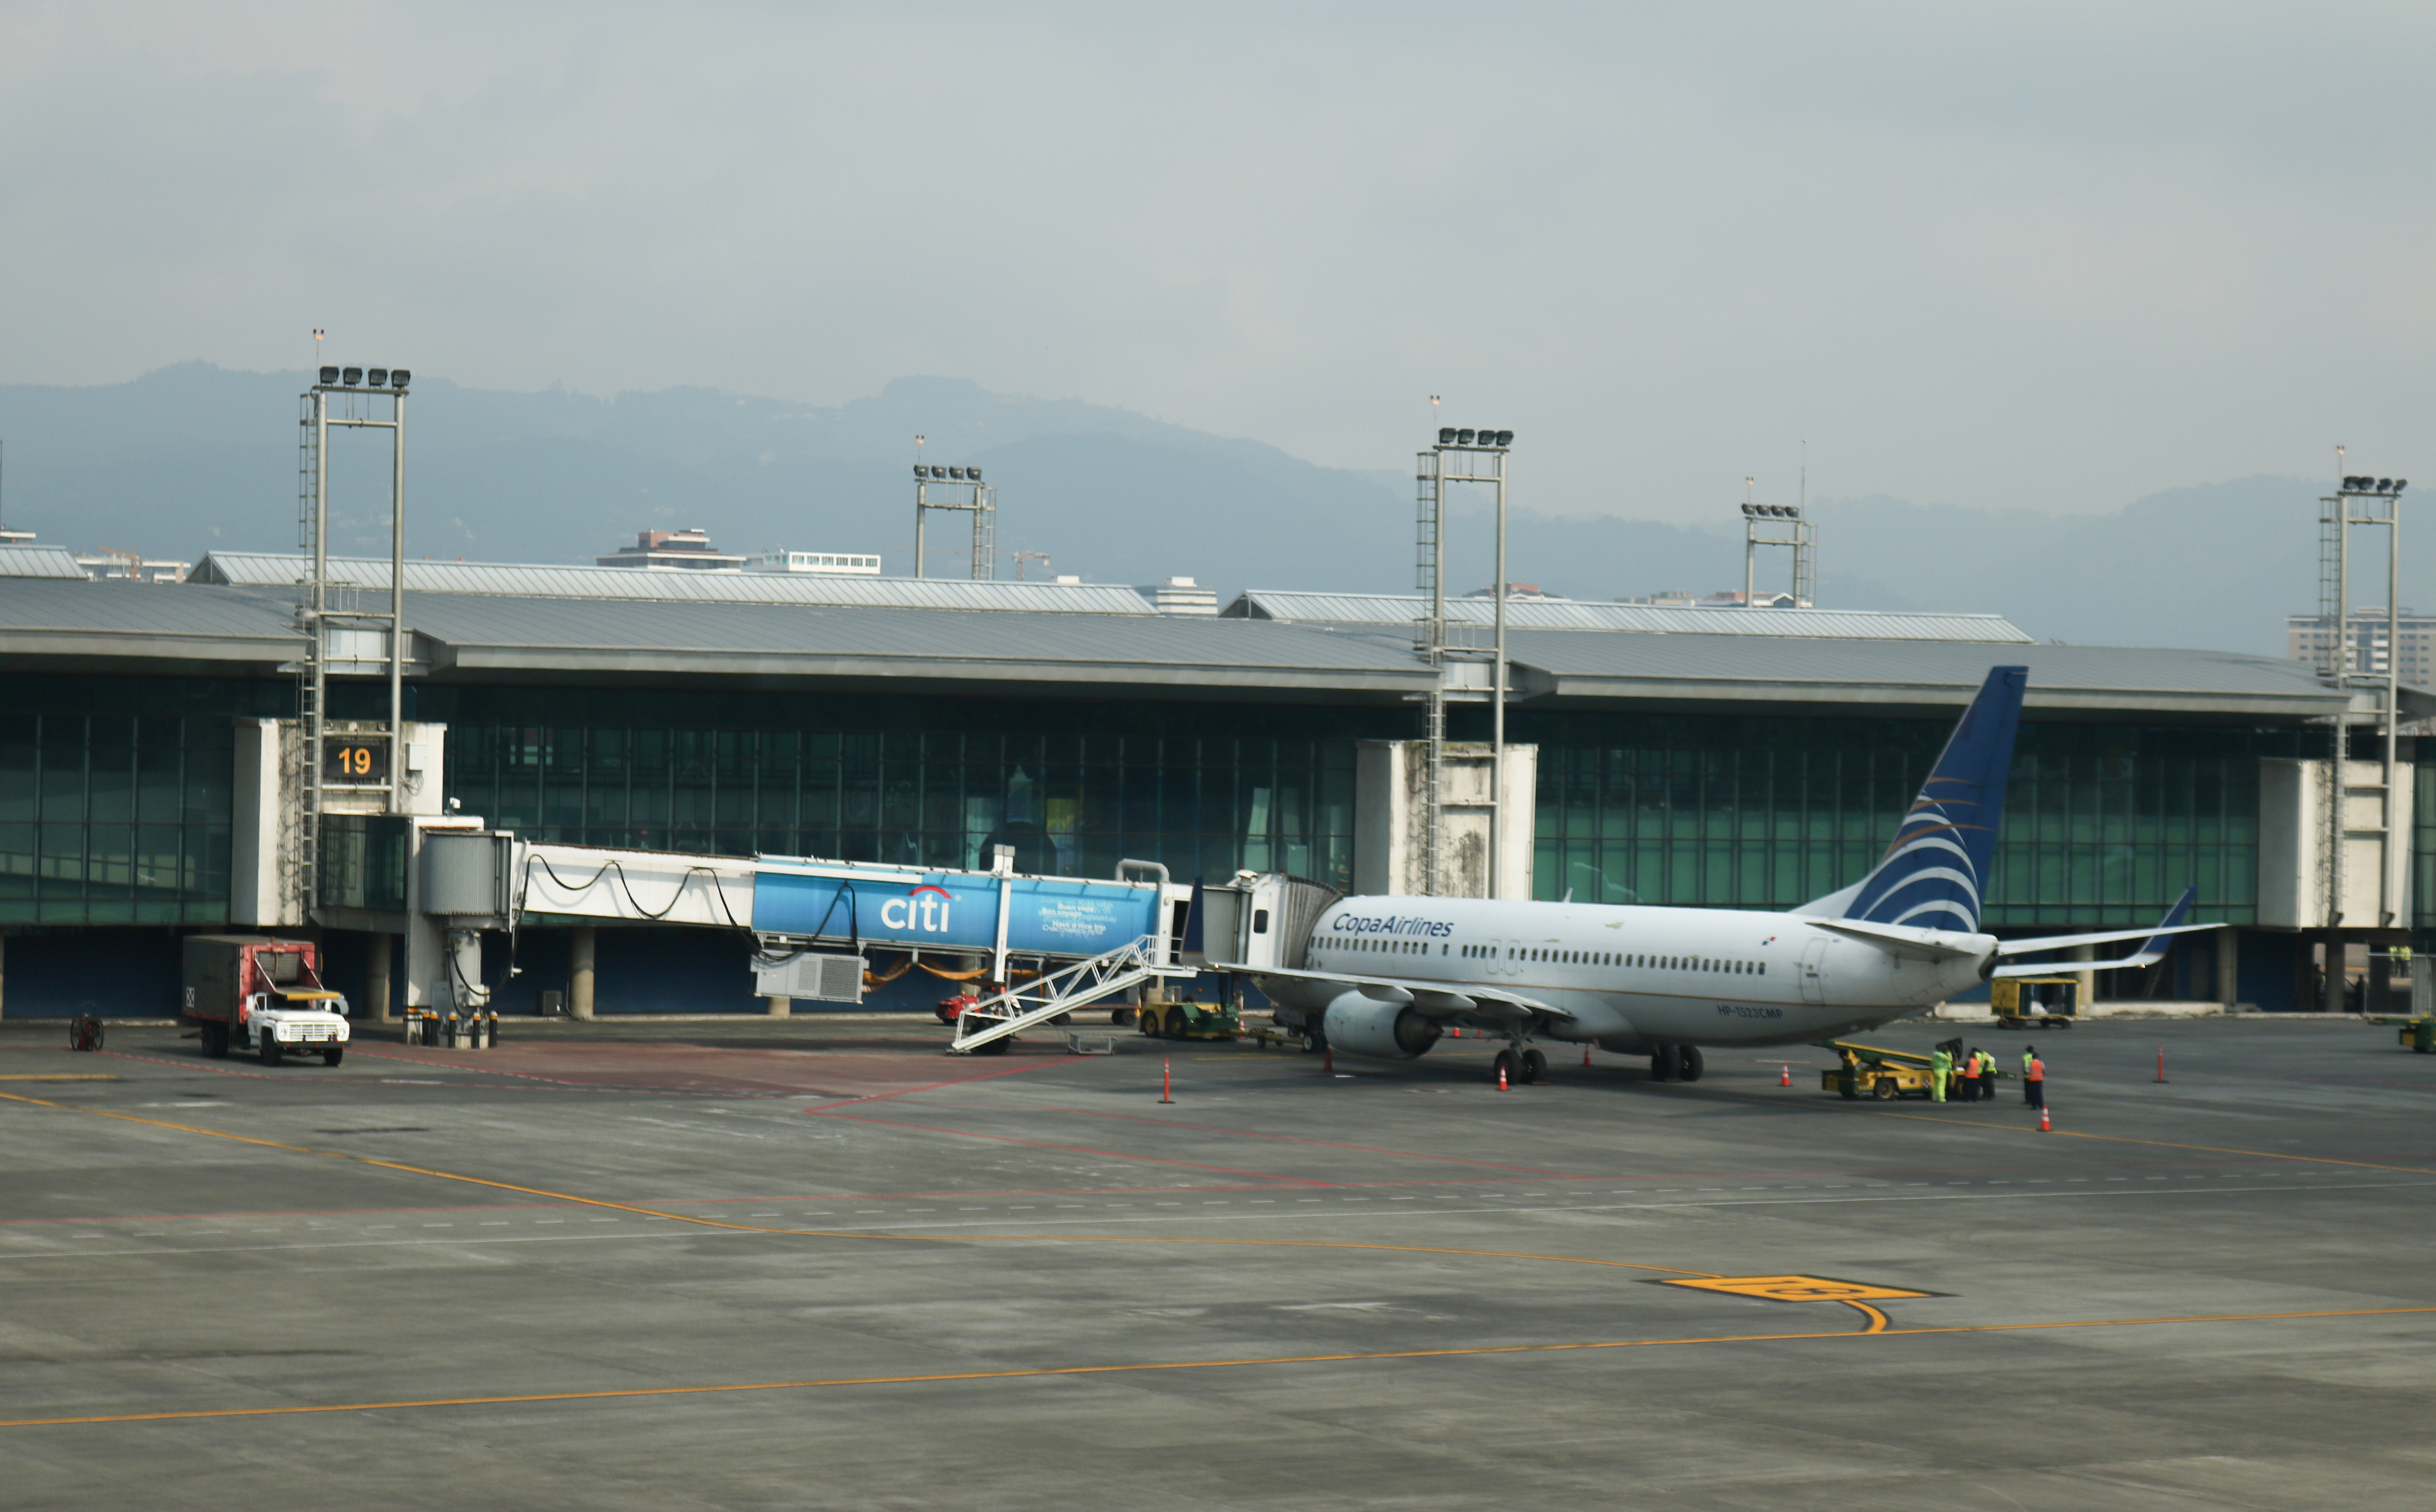 Aeropuerto Internacional La Aurora